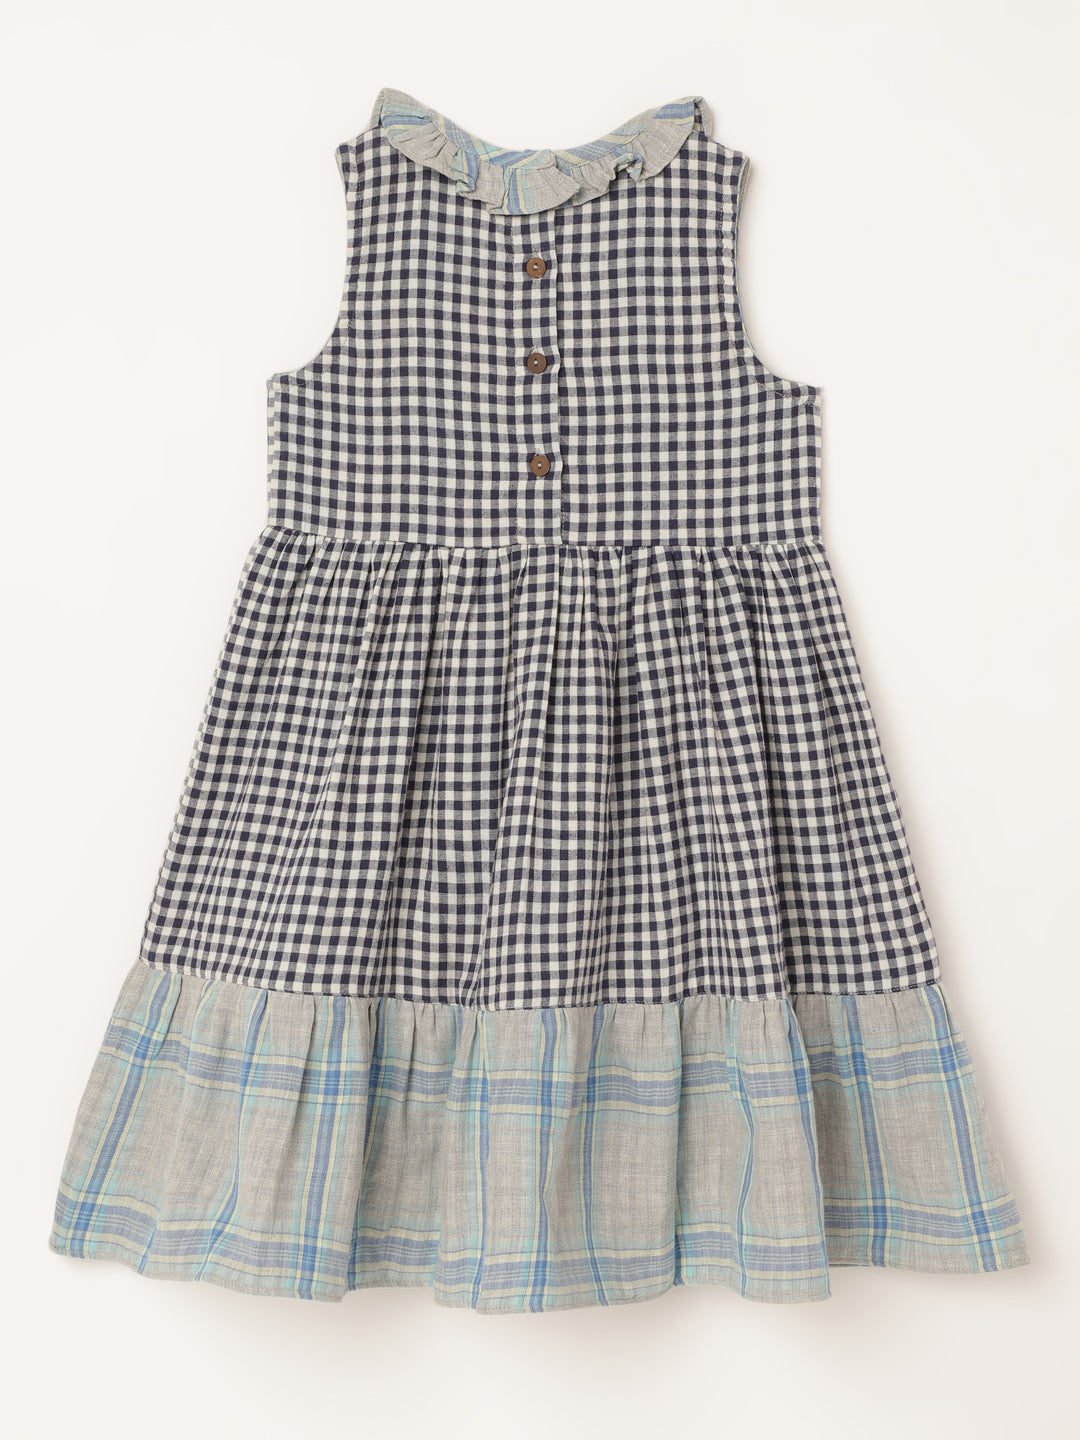 Girls Sleeveless Cotton Blue Checks Dress - 1yr to 8 yrs - Back